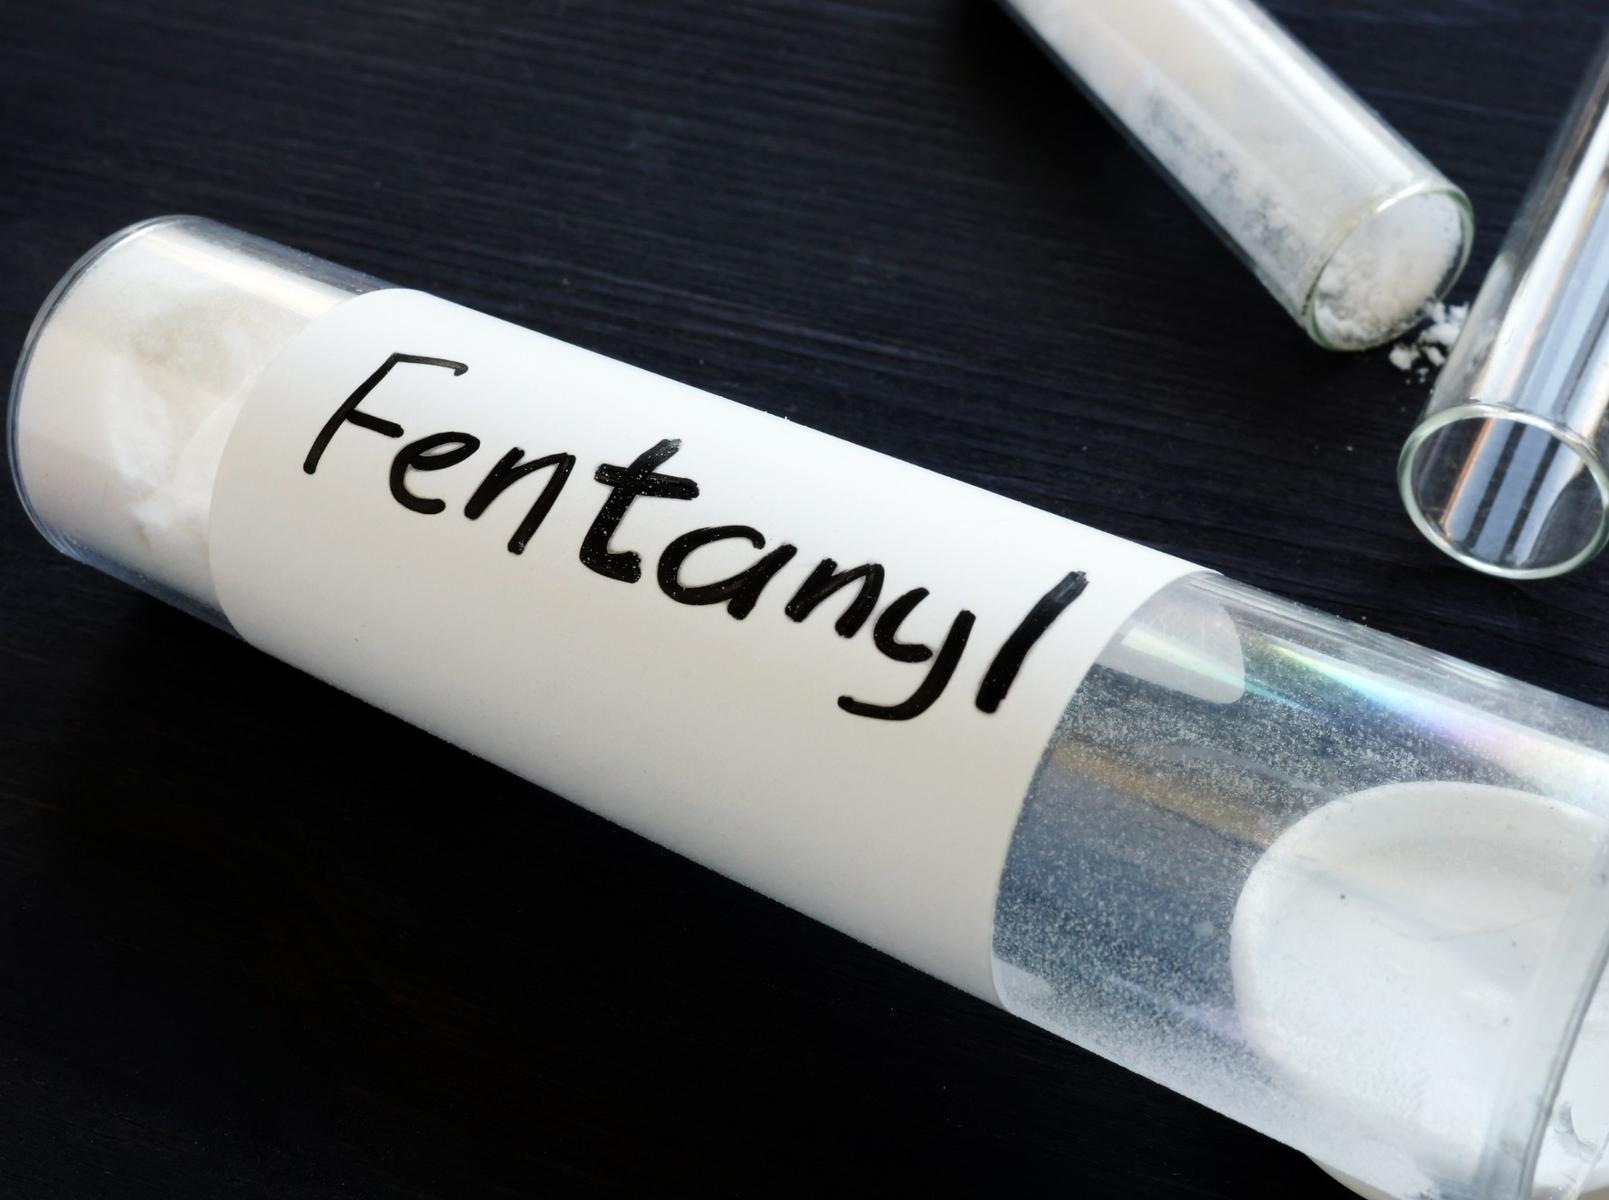 Is Australia Prepared for a Fentanyl Crisis? - Drug Policy Australia